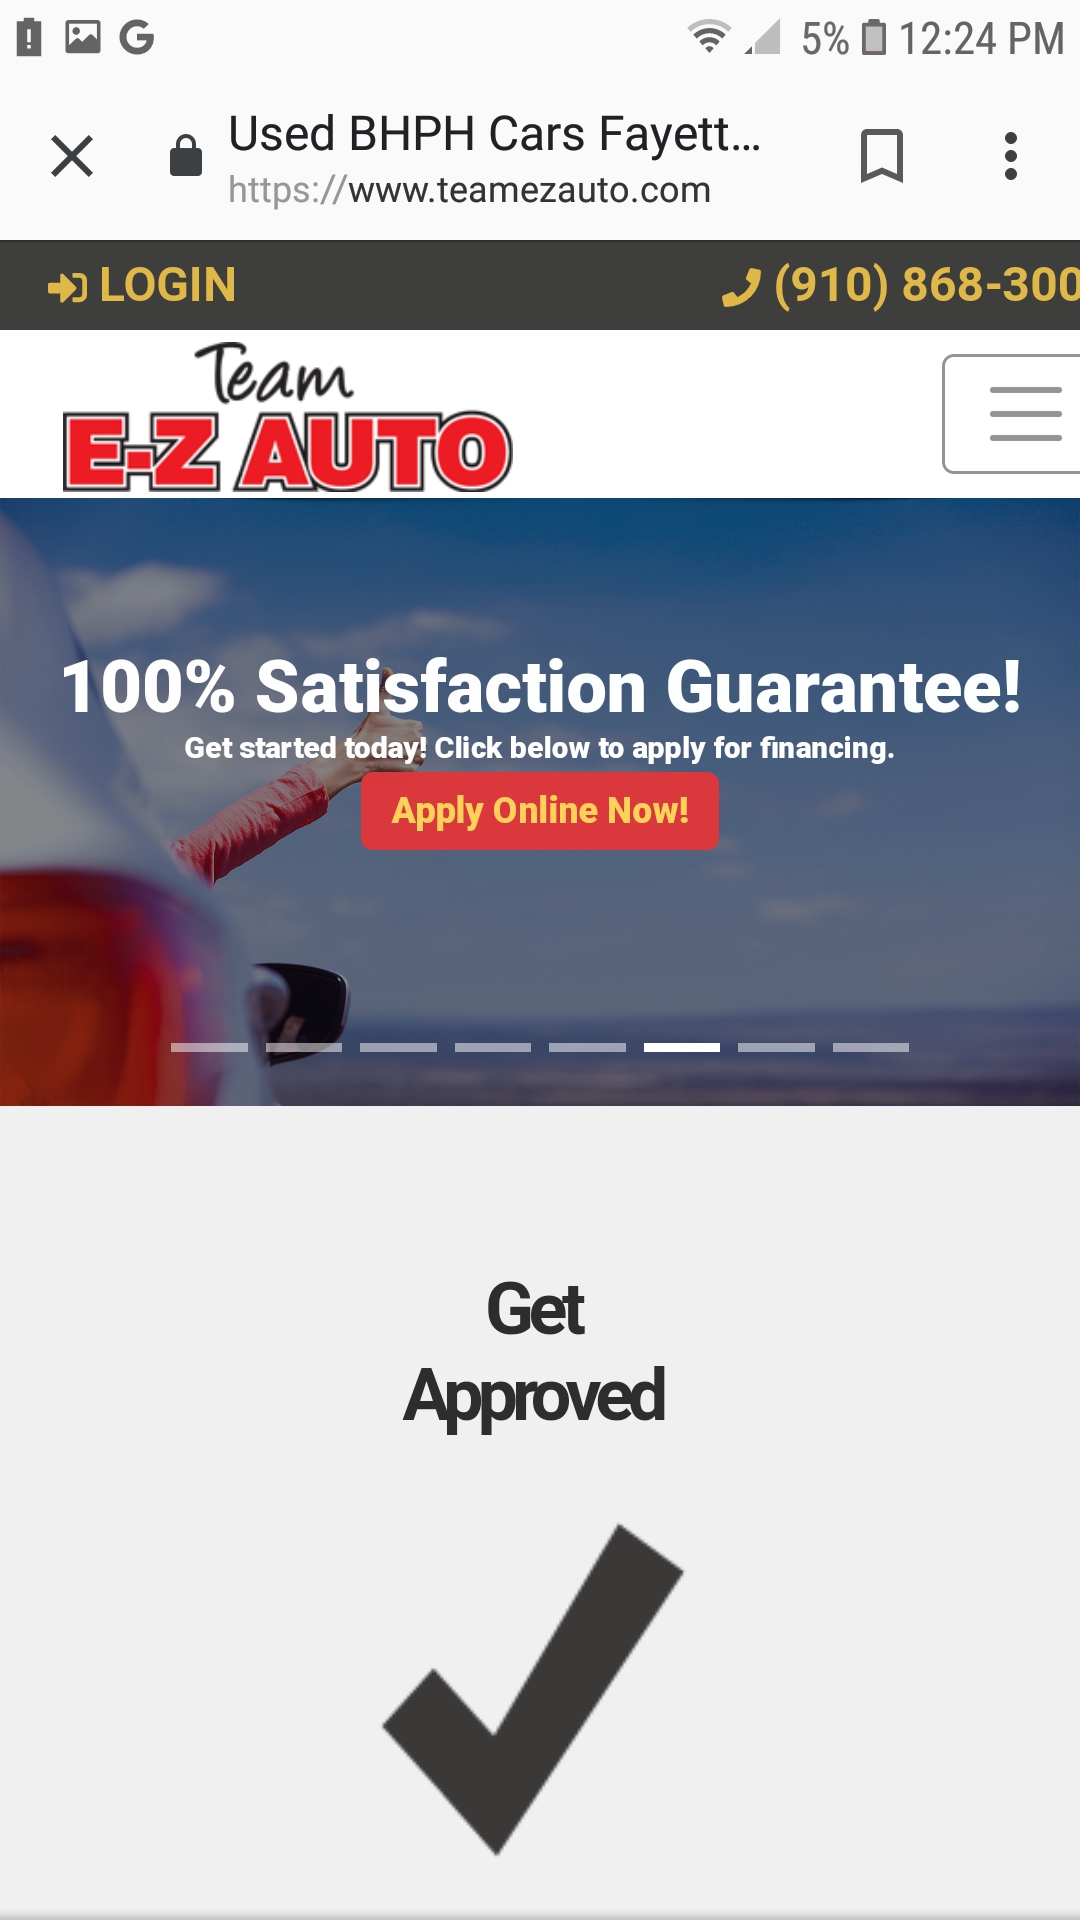 Mobile-friendly auto dealer website example 2